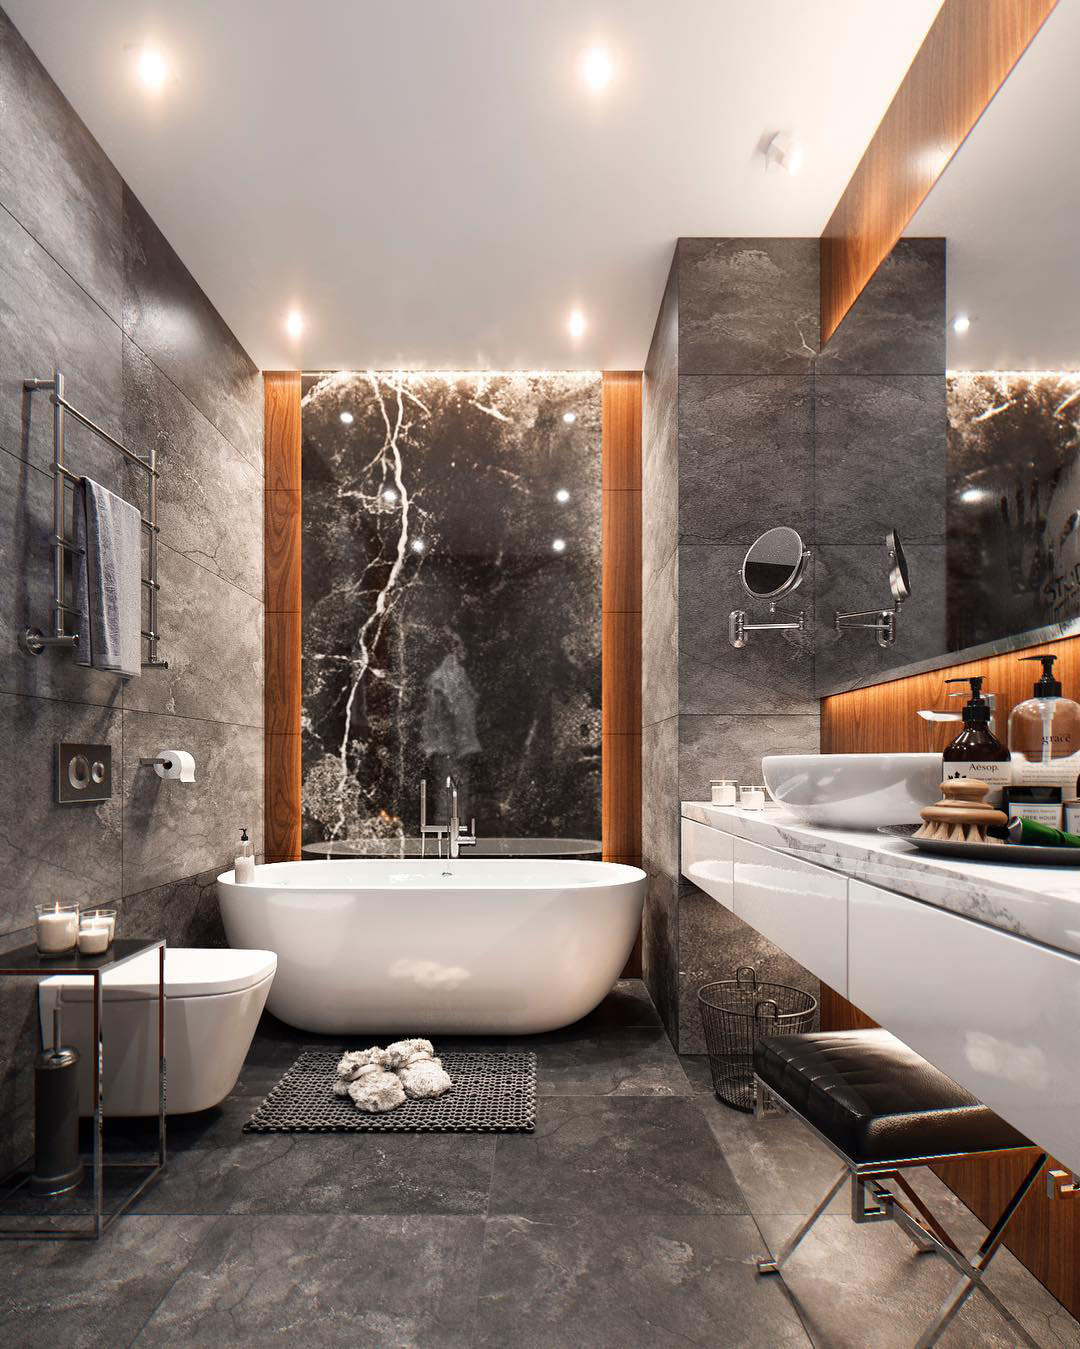 Spa-Like Bathroom by Studia 54